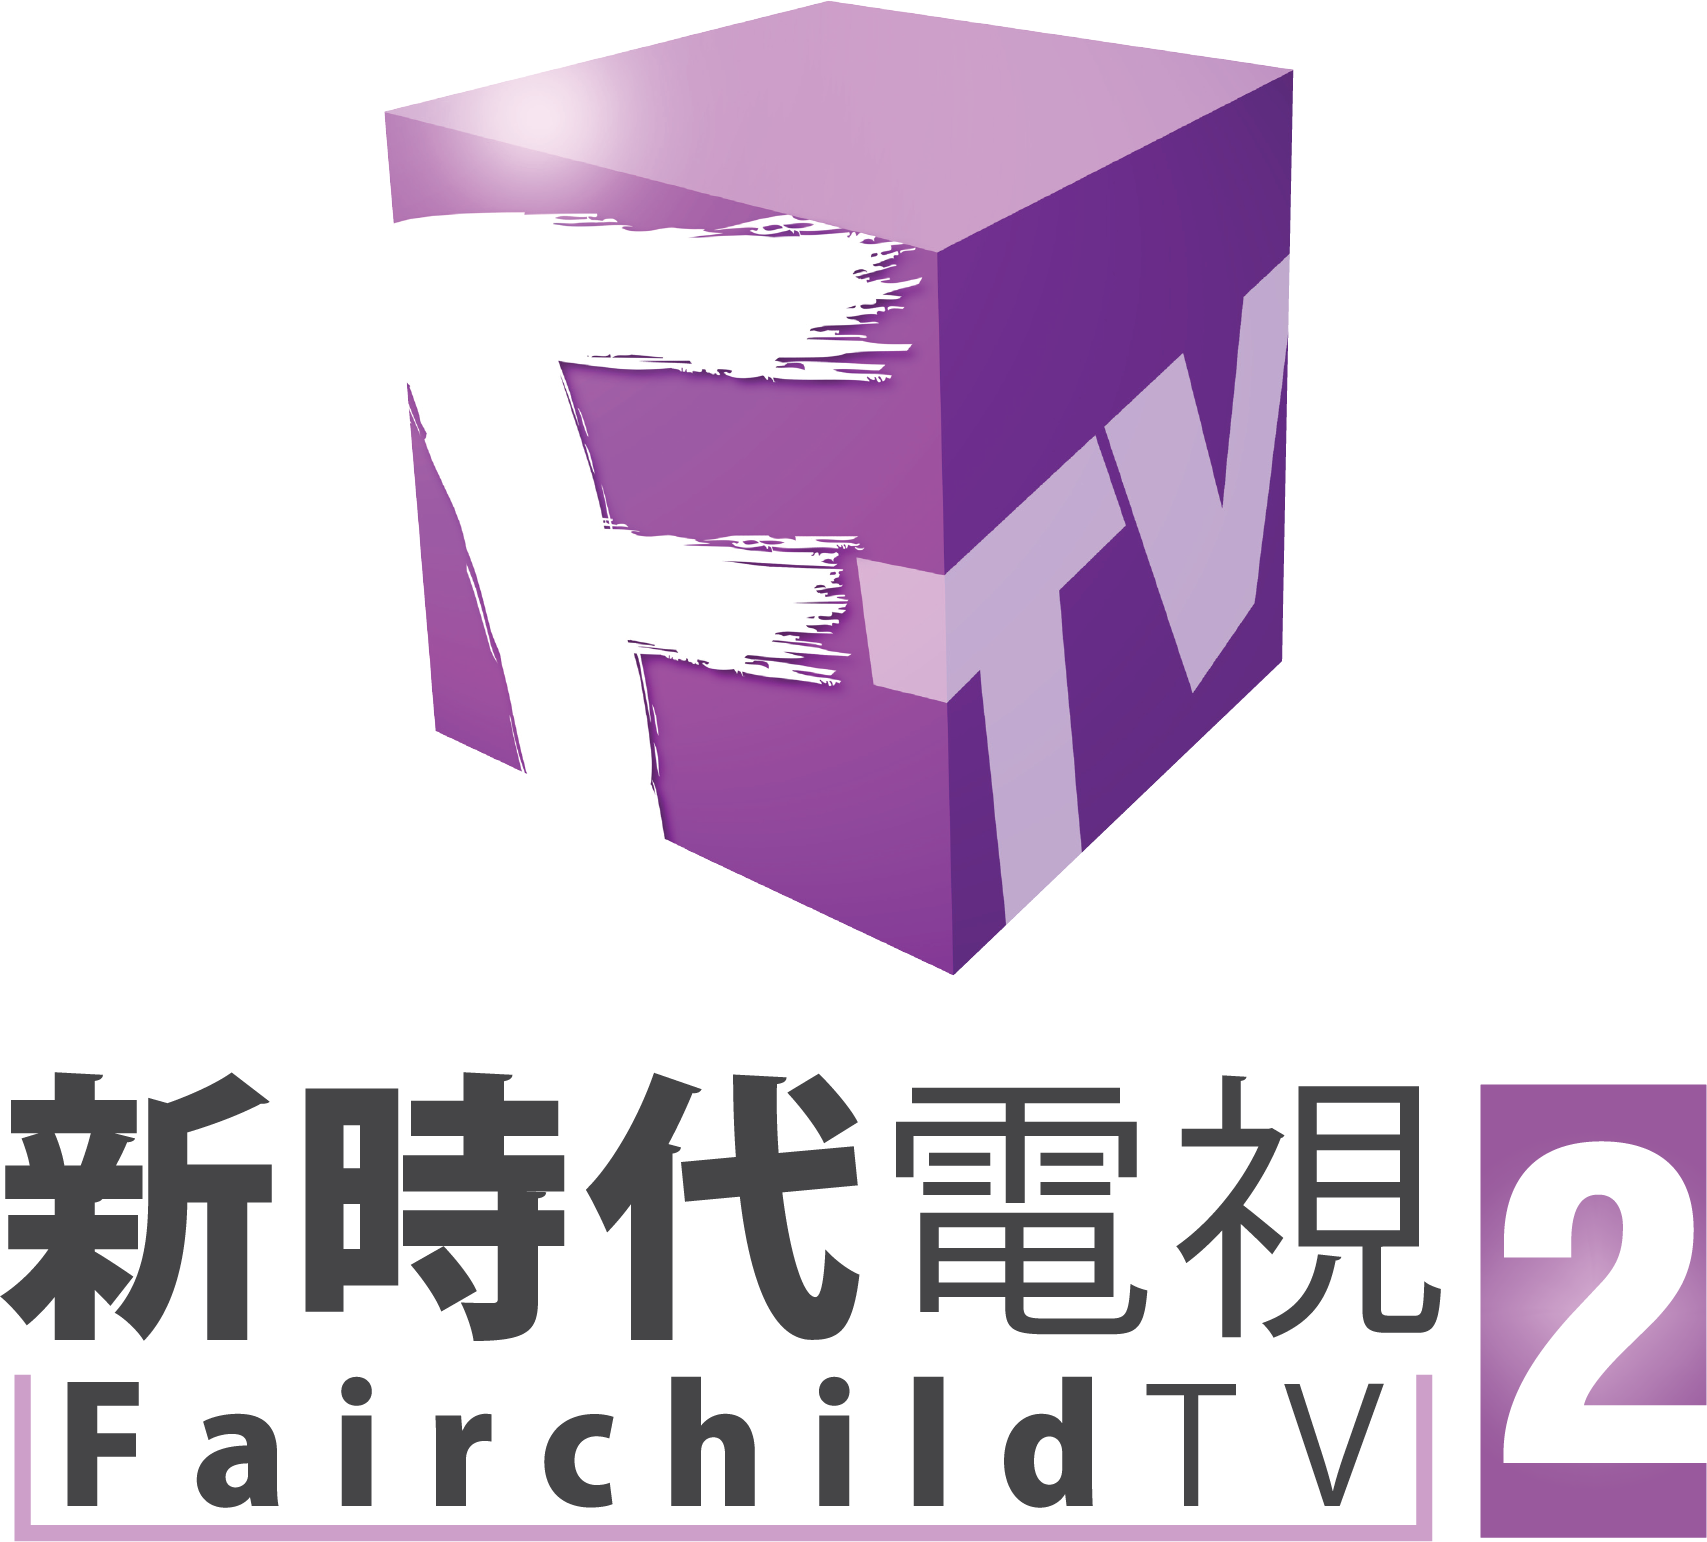 Fairchild 2 Channel Logo